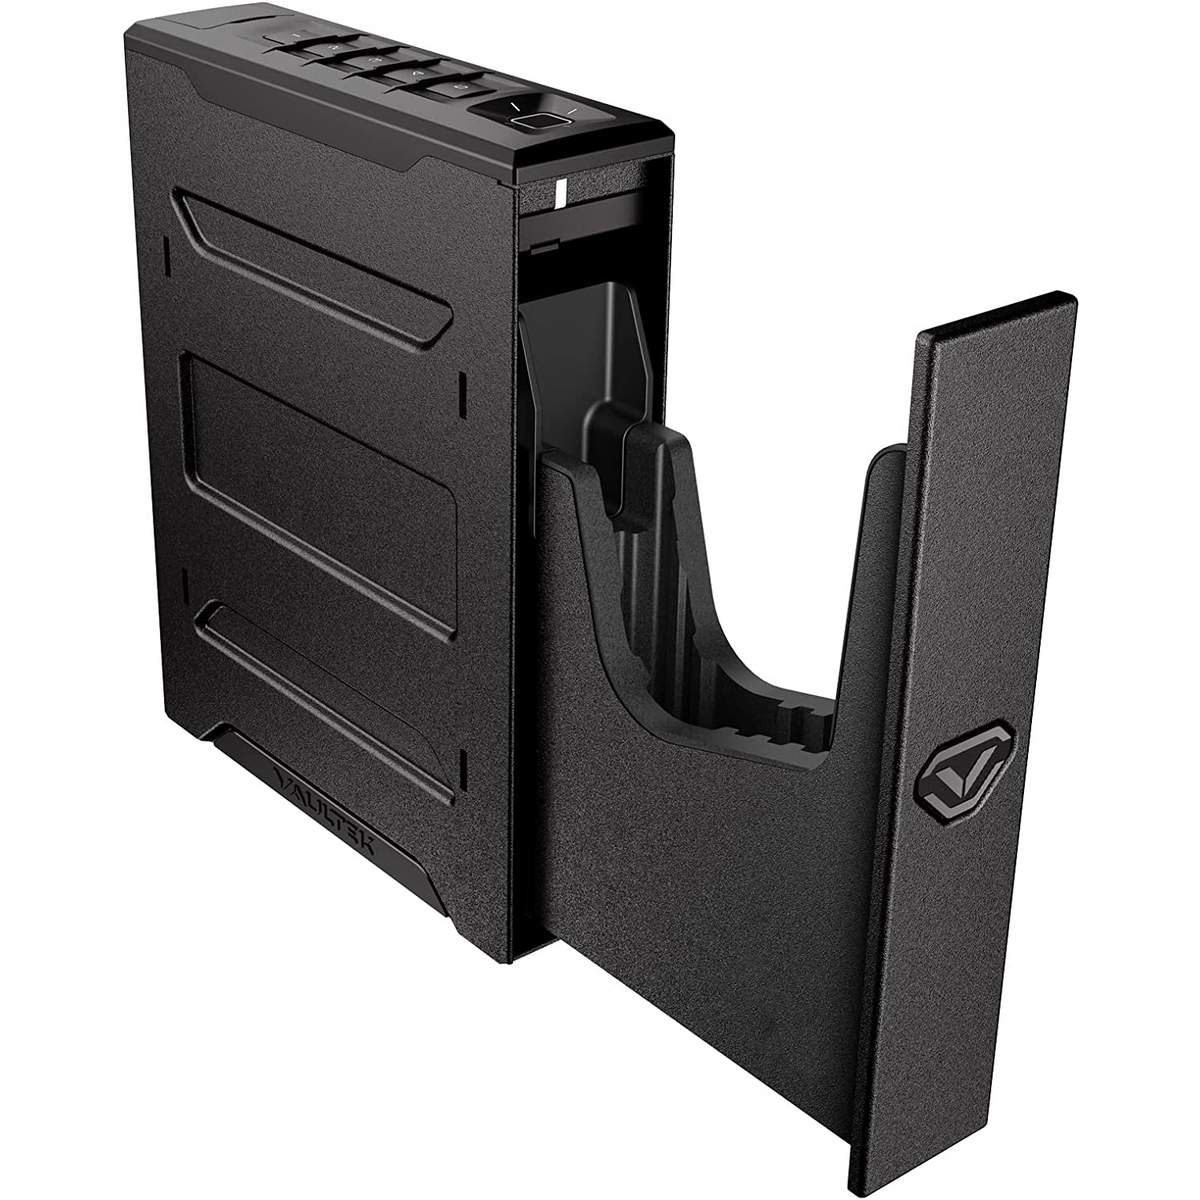 Vaultek - NSL20i Quick Access Biometric and WiFi Slider Gun Safe